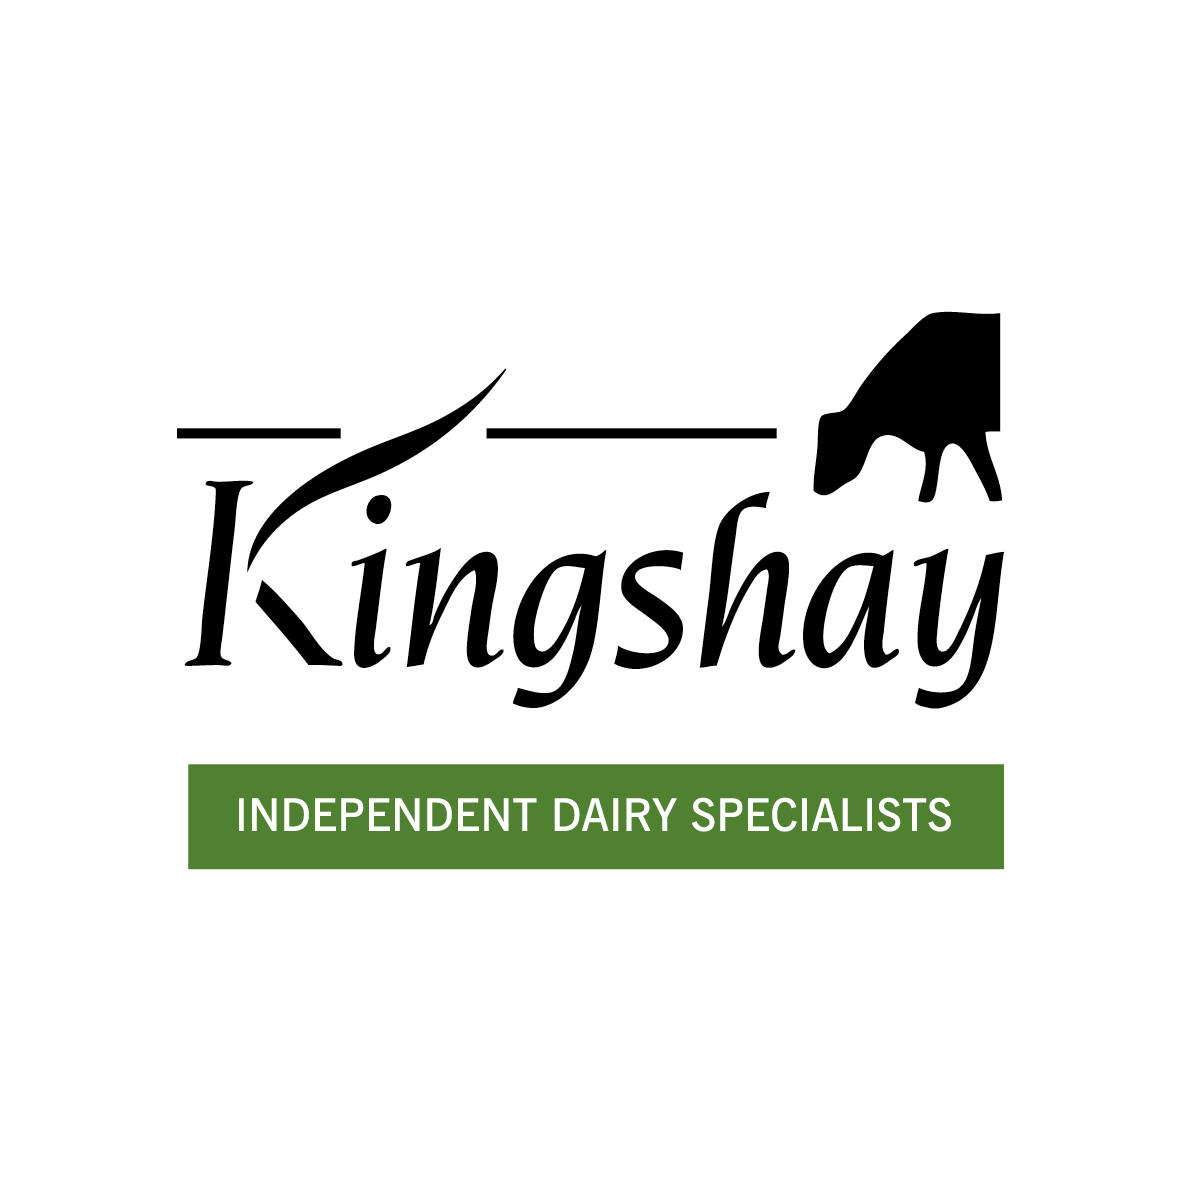 Images Farm IQ - Based at Kingshay